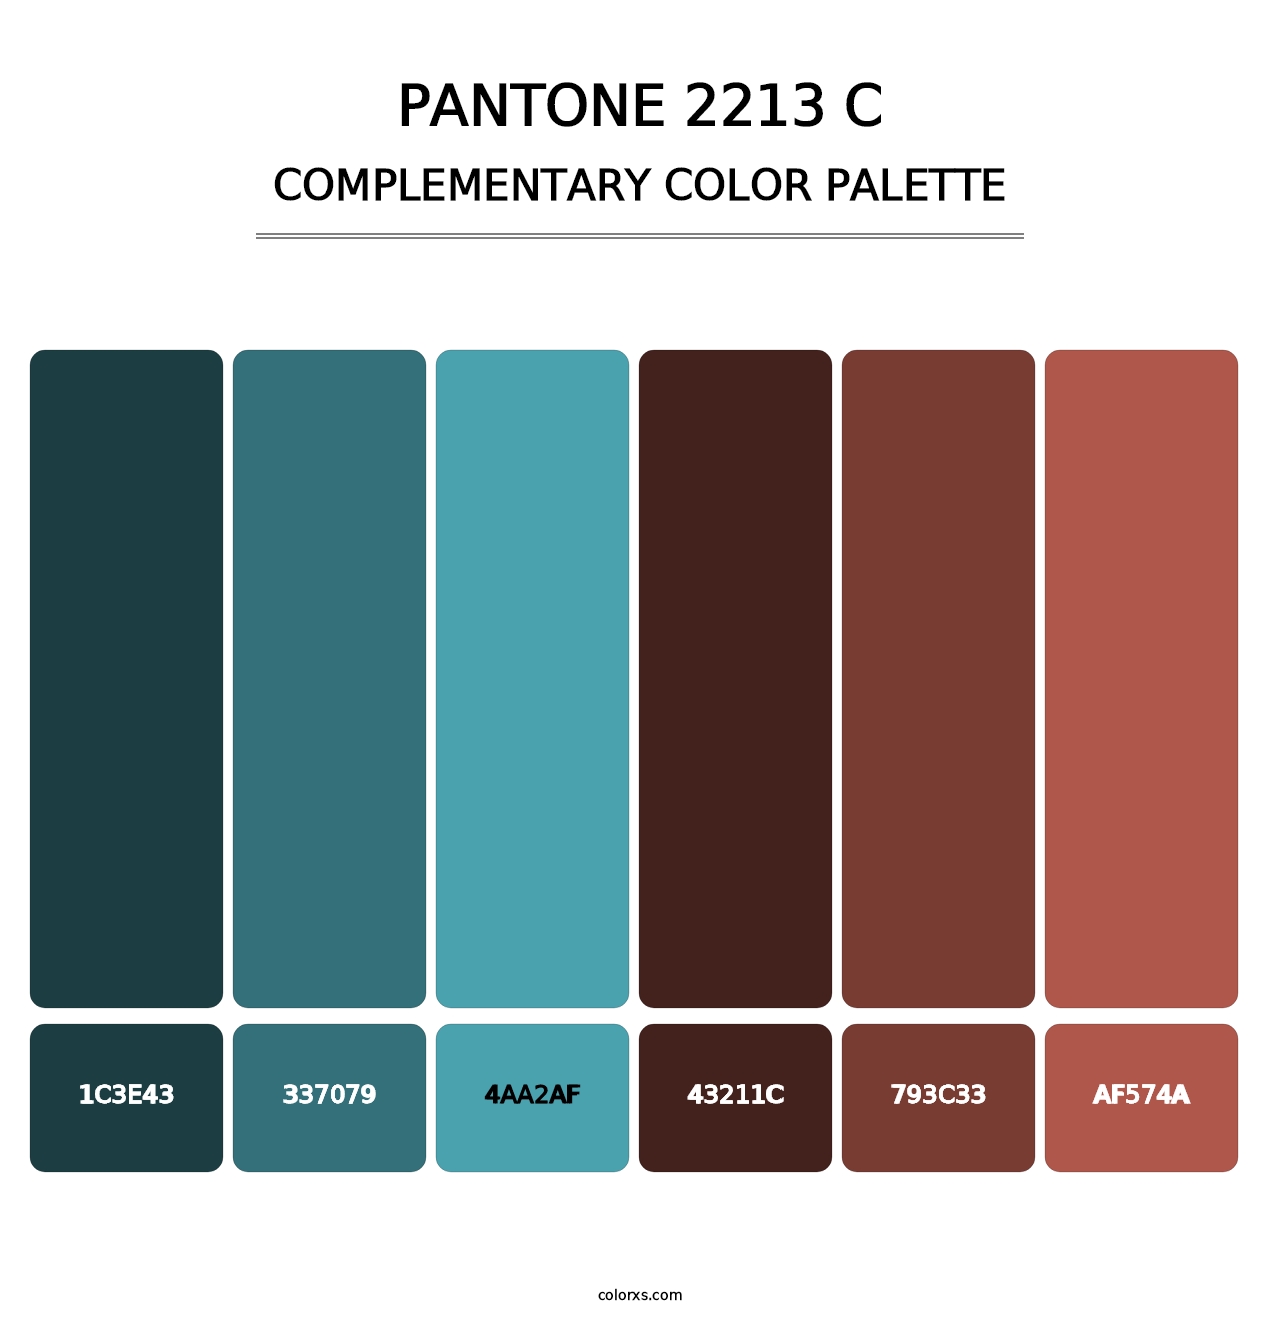 PANTONE 2213 C - Complementary Color Palette